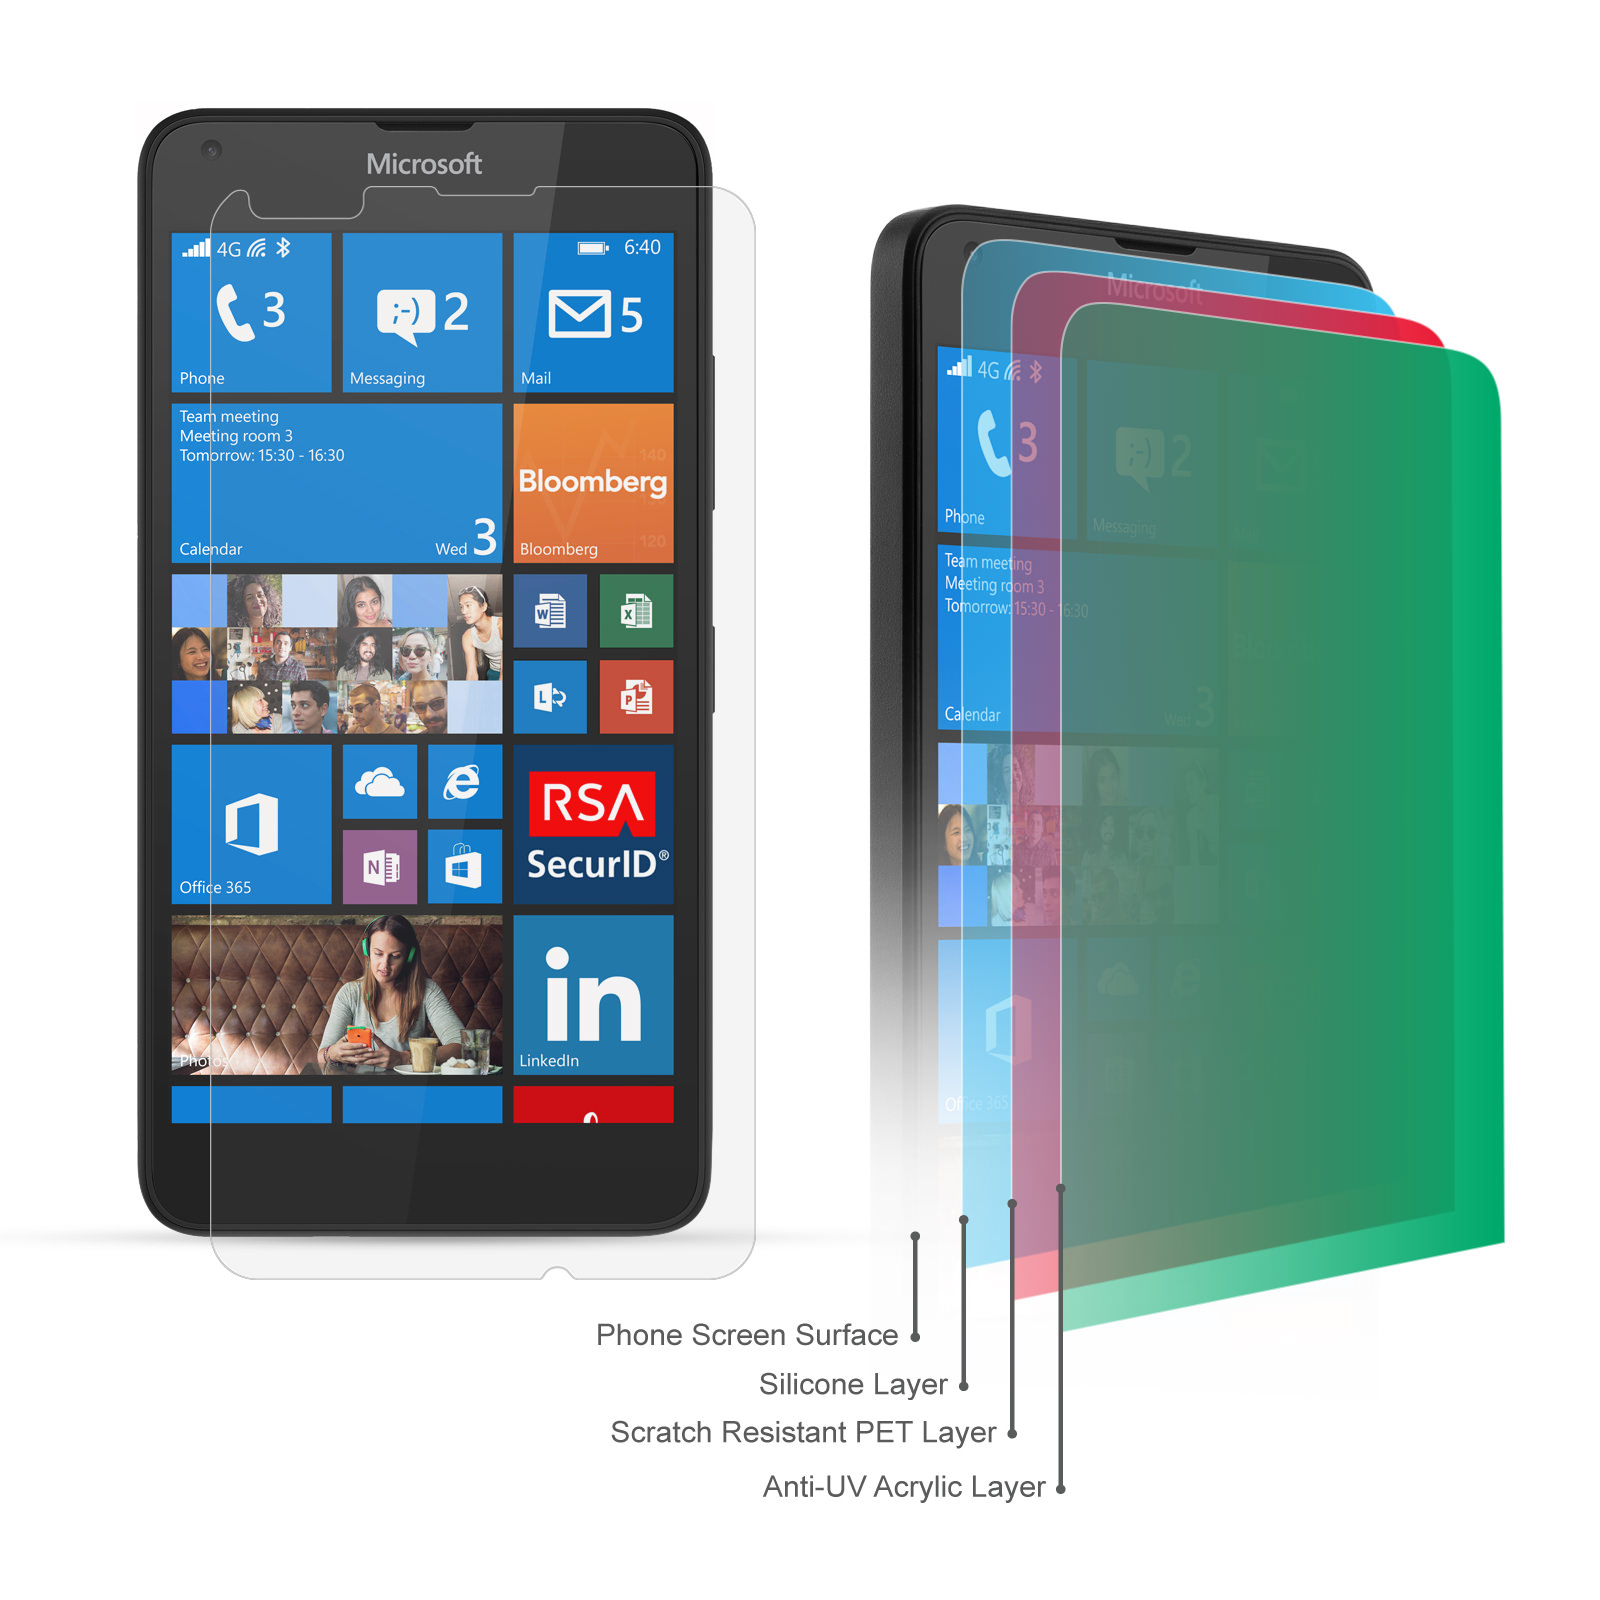 Yousave Accessories Microsoft Lumia 640 Screen Protectors x5